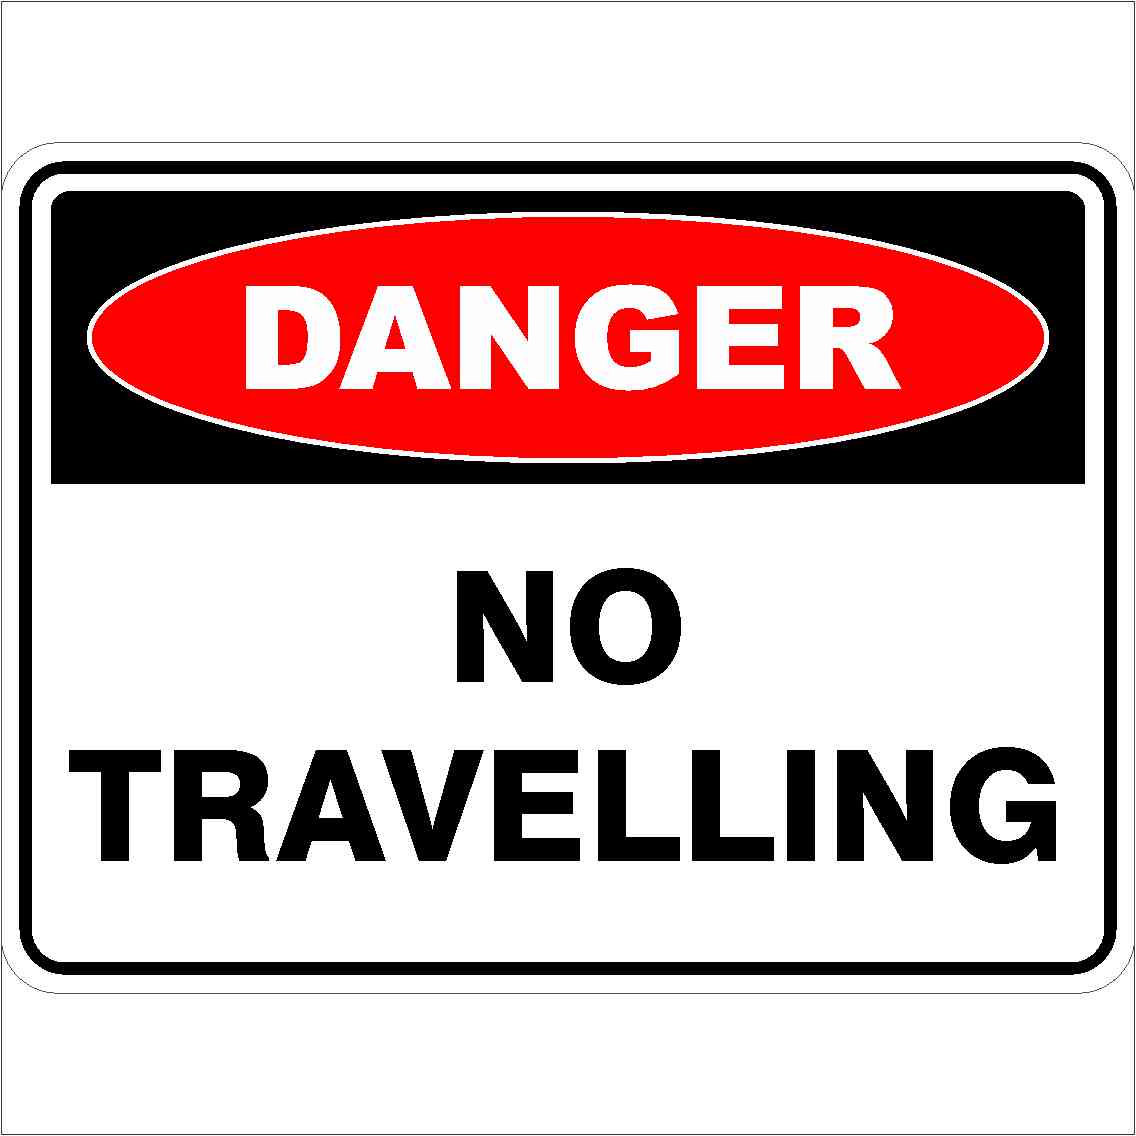 Dangerous travelling